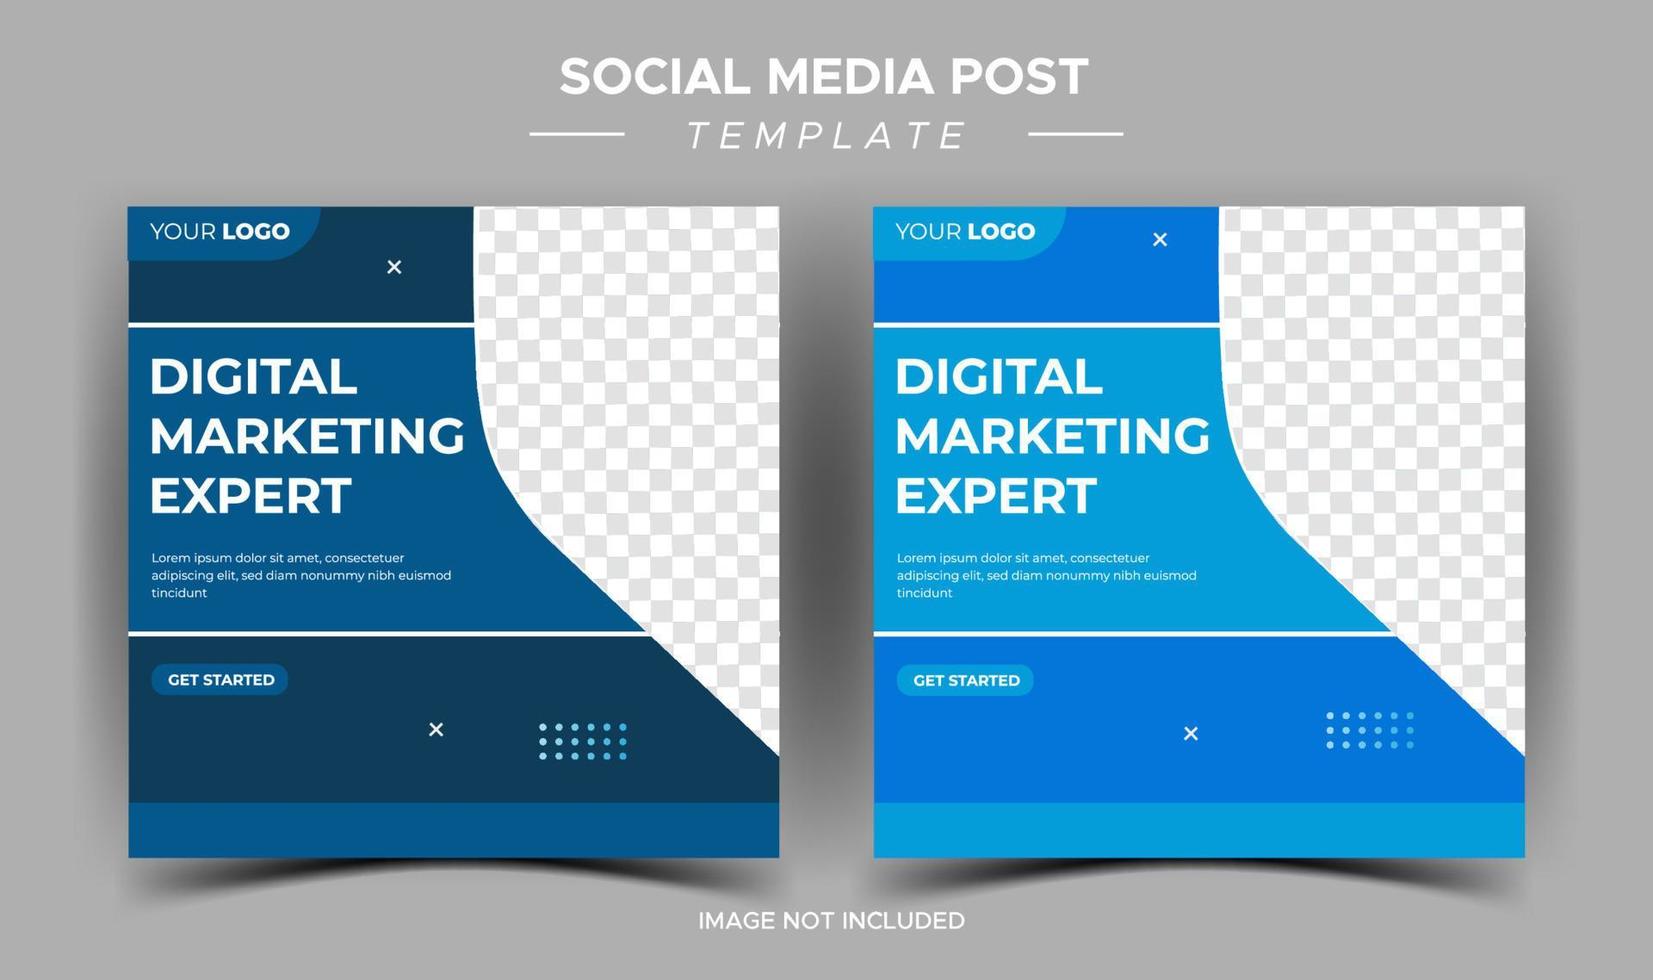 Digital business marketing expert social media post template vector